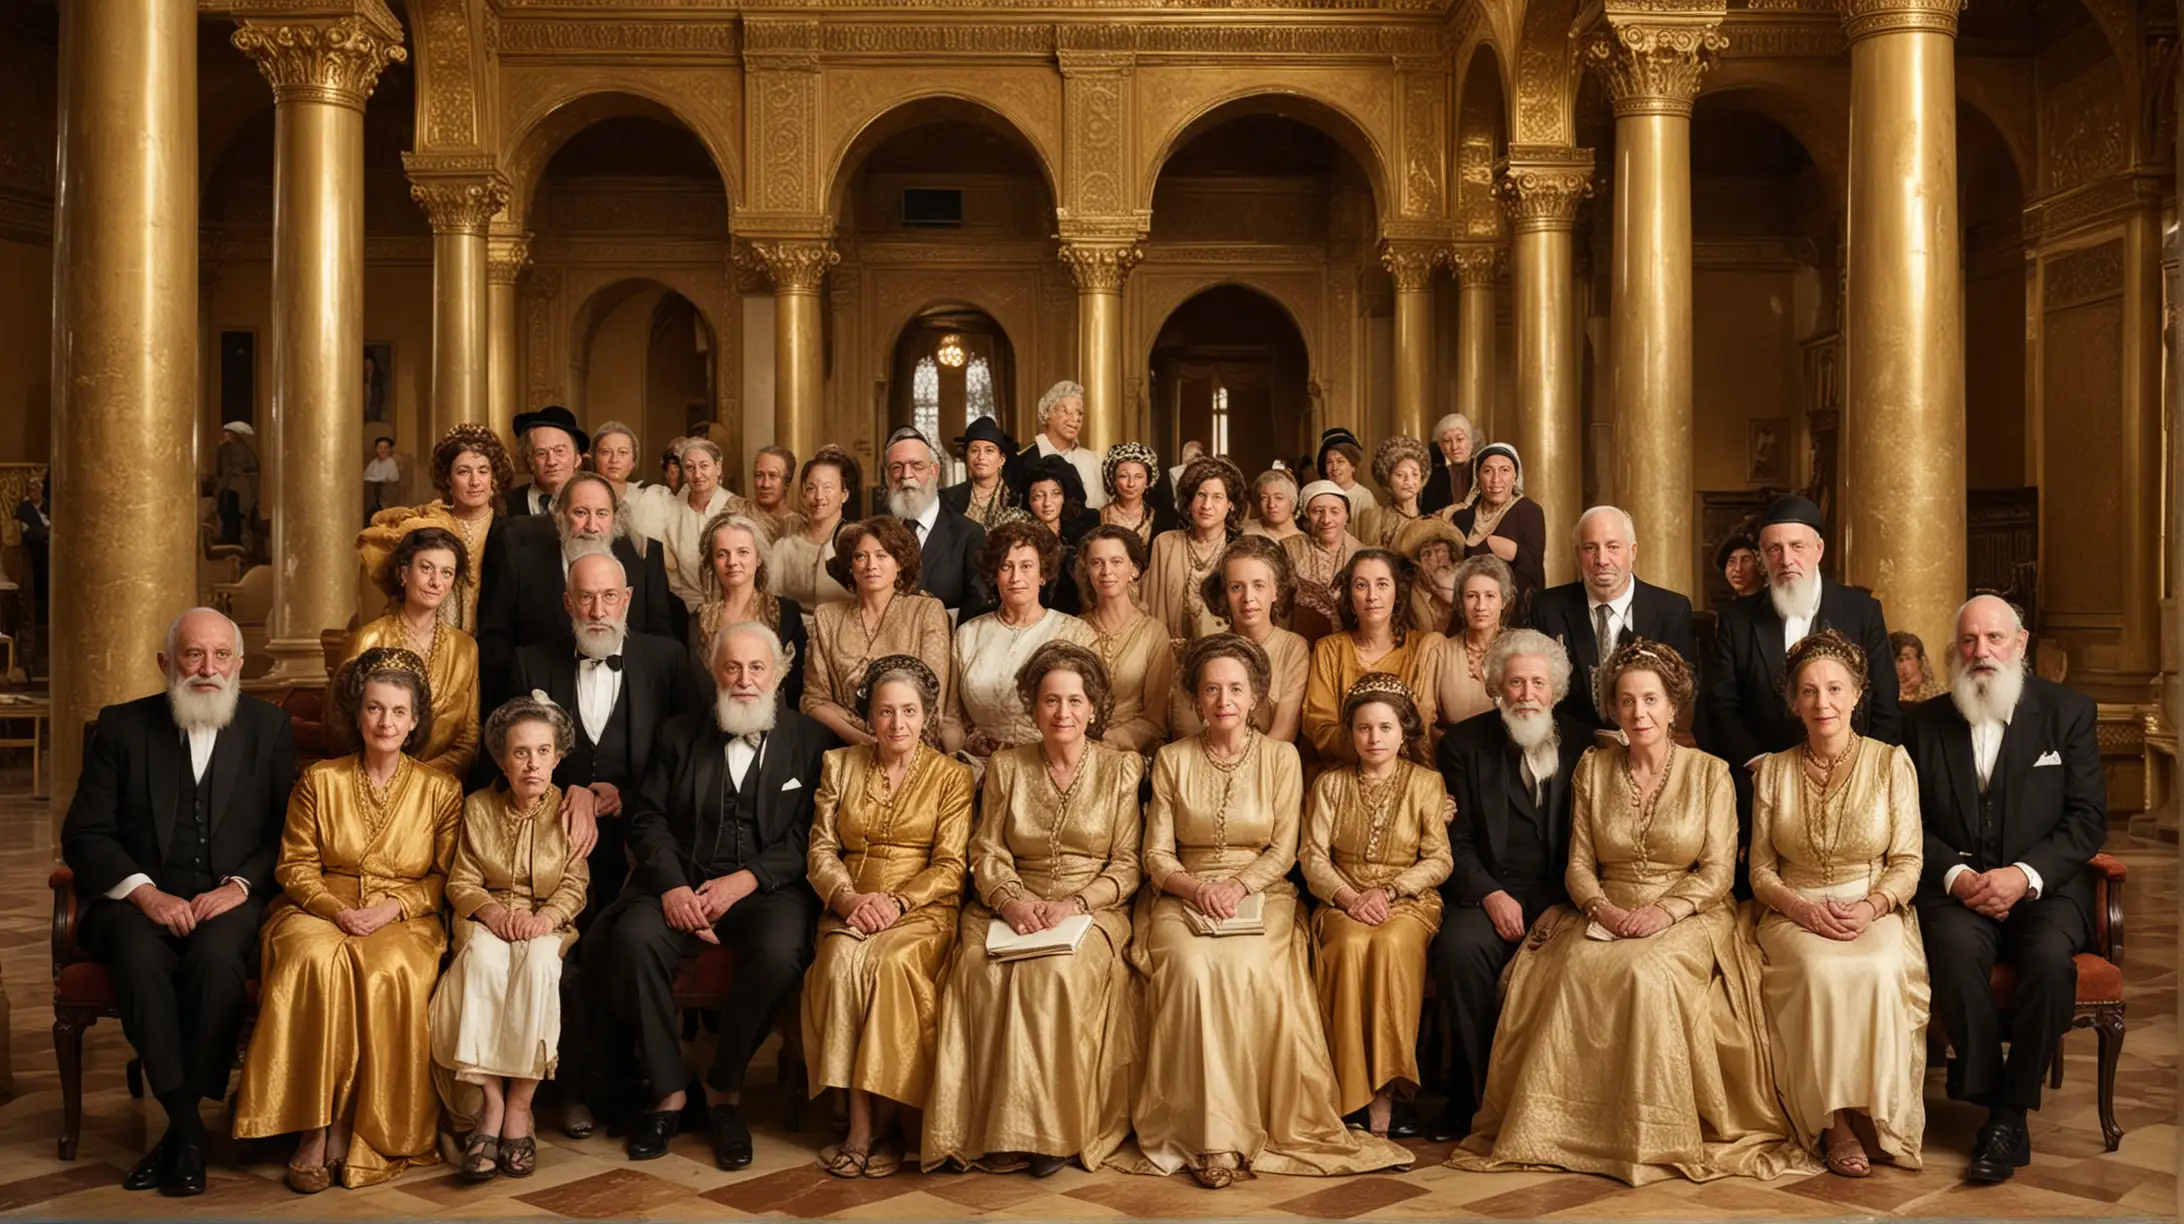 Large Jewish Family Gathering in Ornate Golden Palace